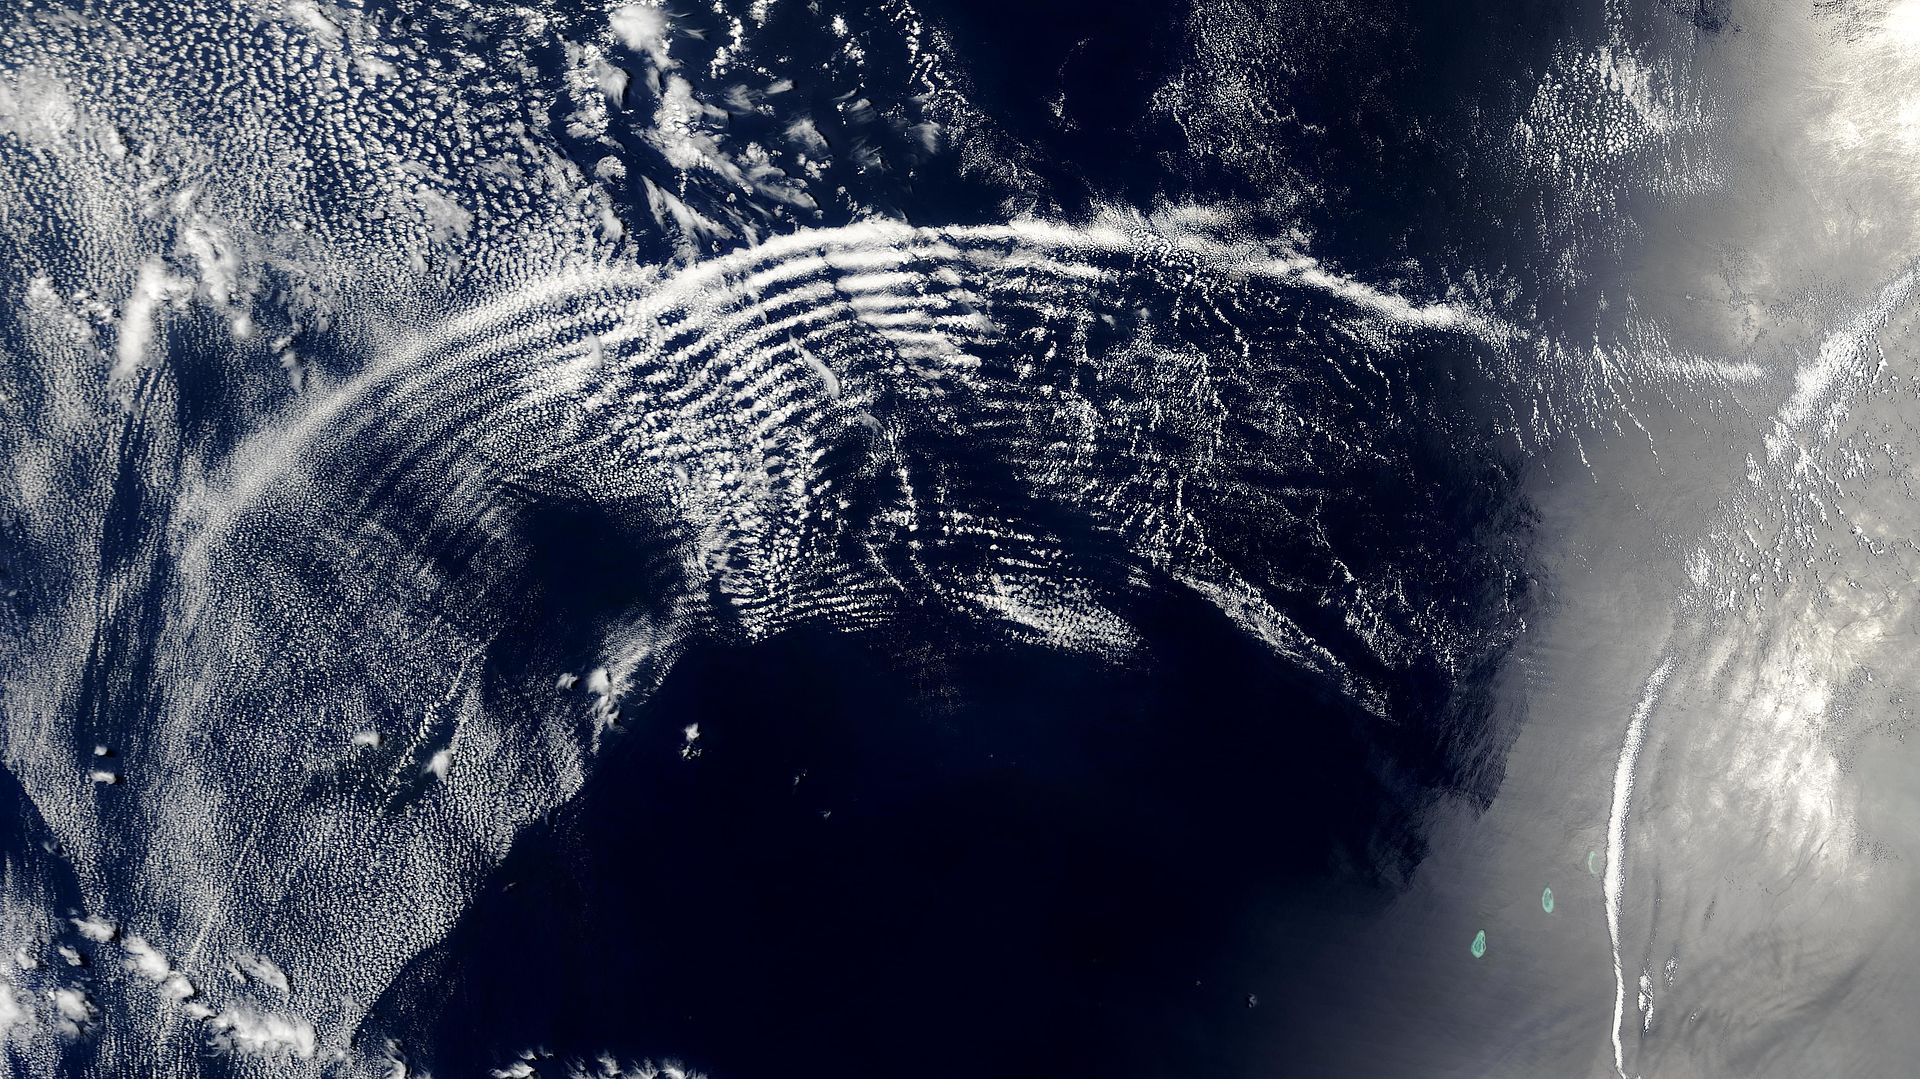 Atmospheric Gravity Waves over the Indian Ocean. Image credit: J. Descloitres, MODIS, Rapid Response Team, NASA/GSFC